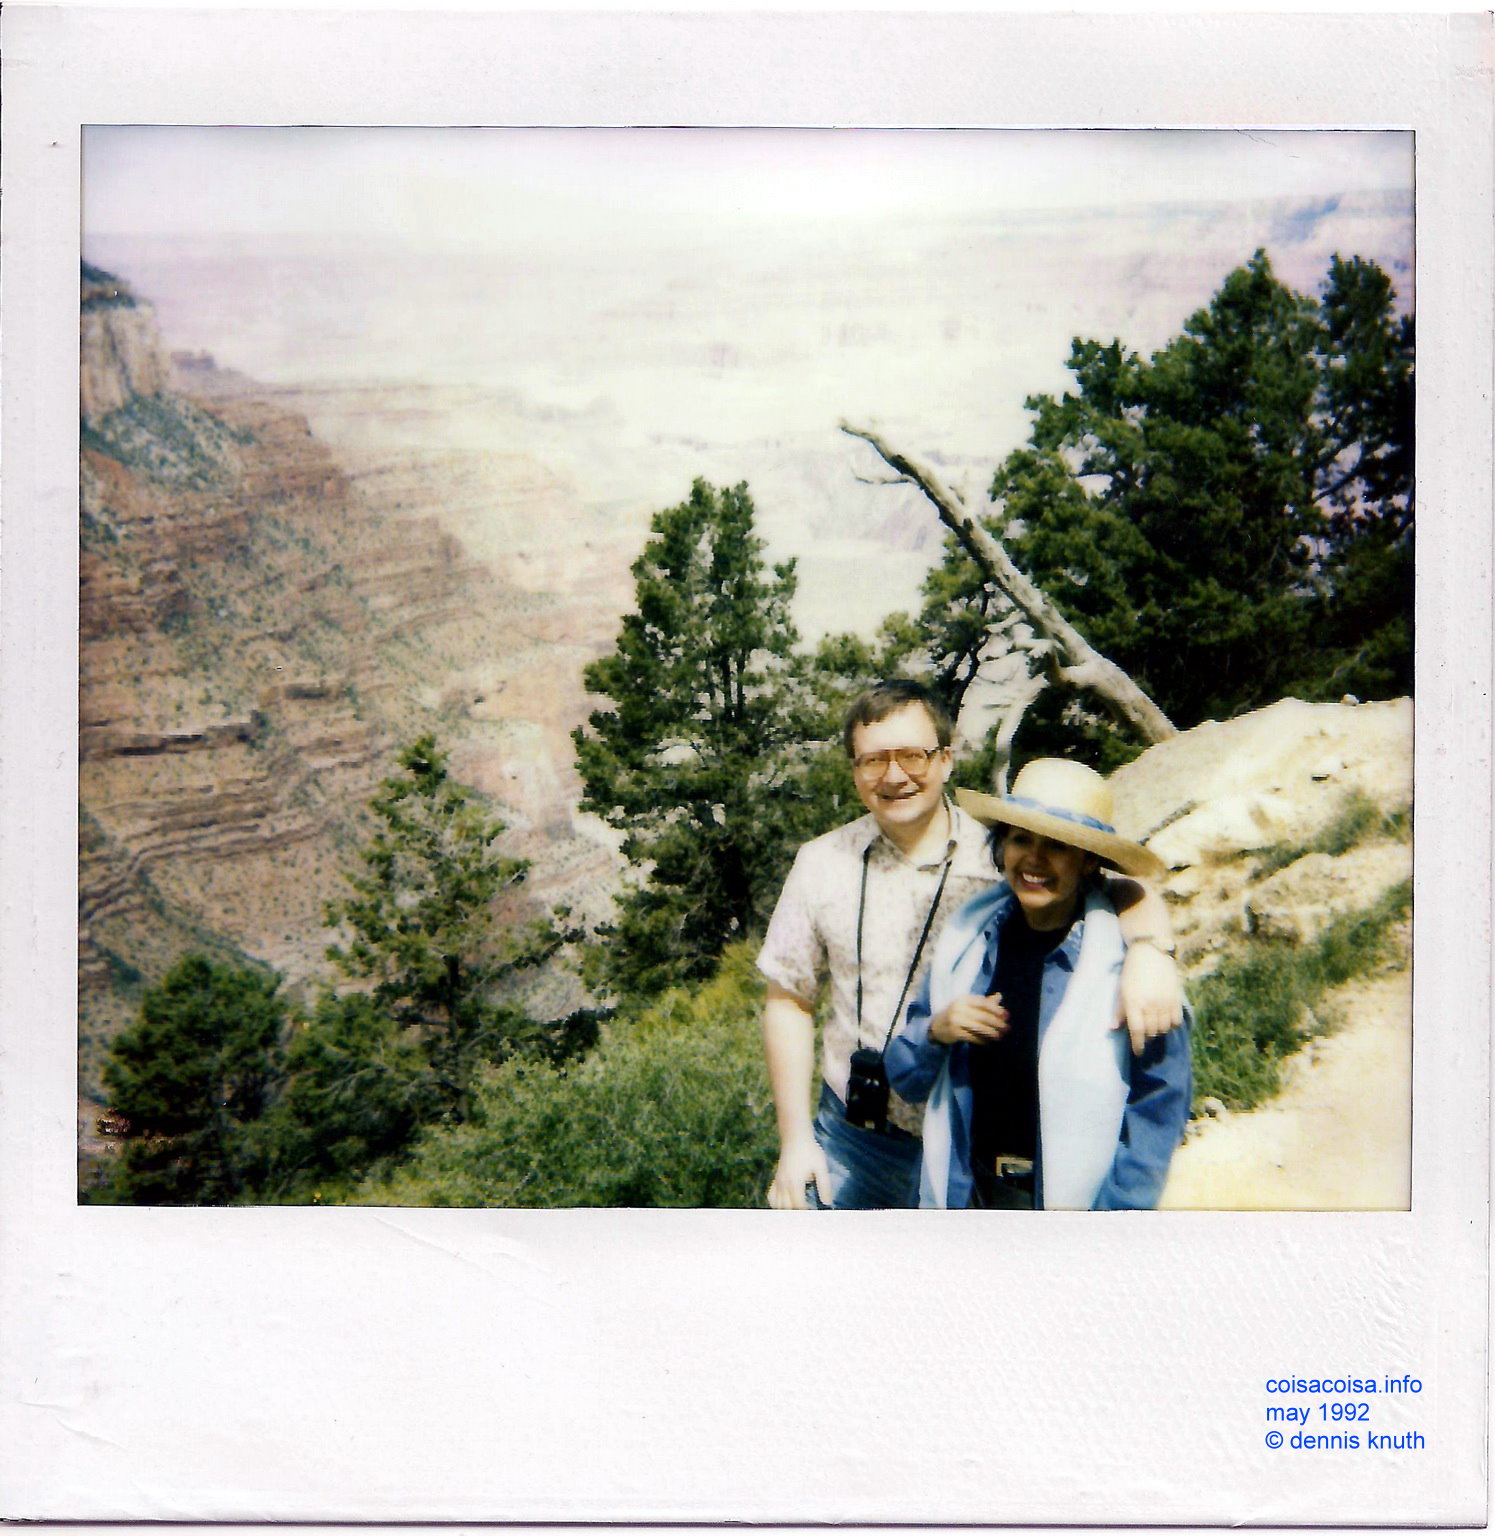 Dennis KNuth and Regina Enter the Grand Canyon